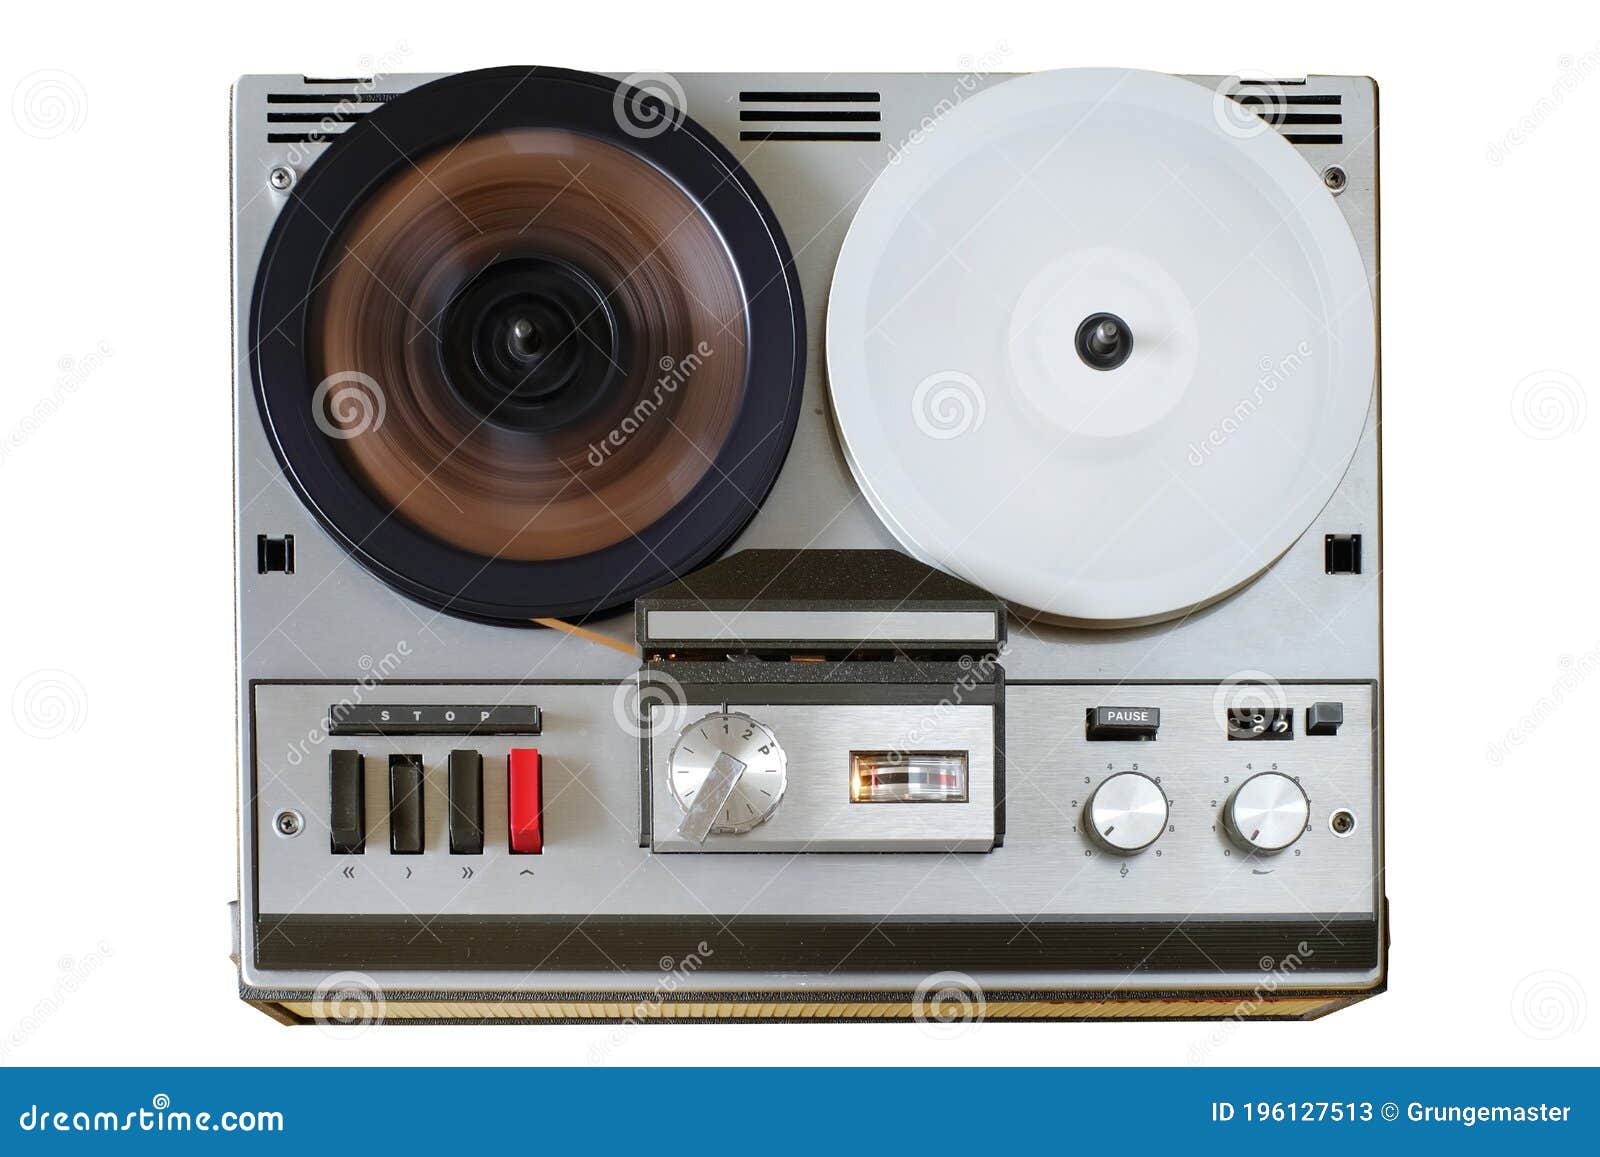 Vintage Reel To Reel Tape Recorder, Open Reel Audio Recorder